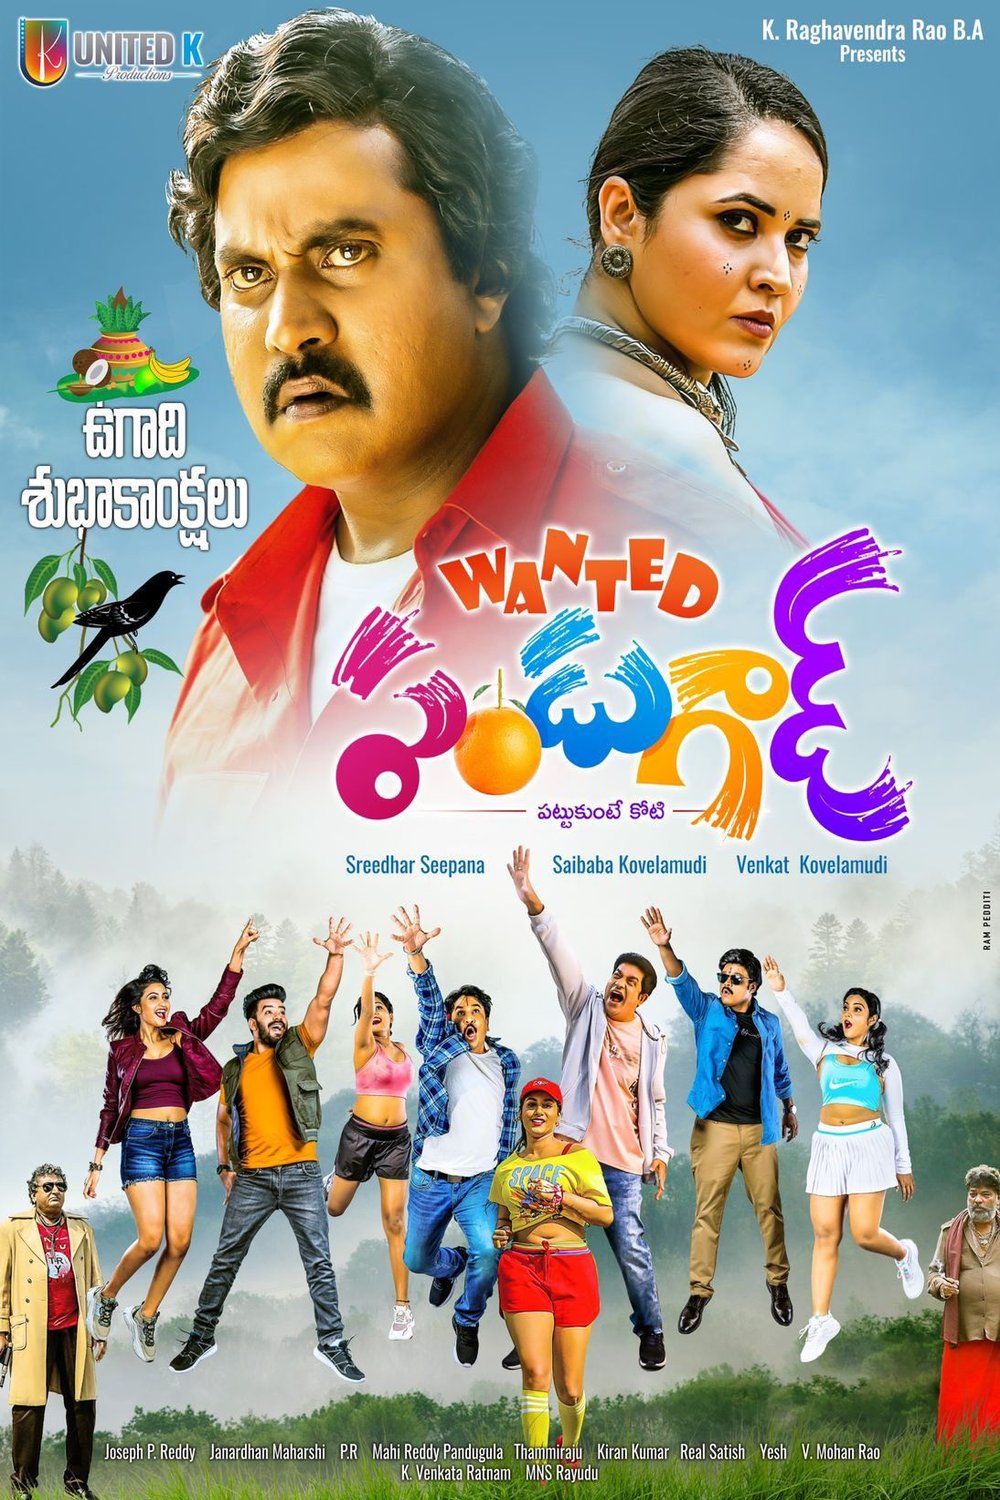 Telugu poster of the movie Wanted PanduGod